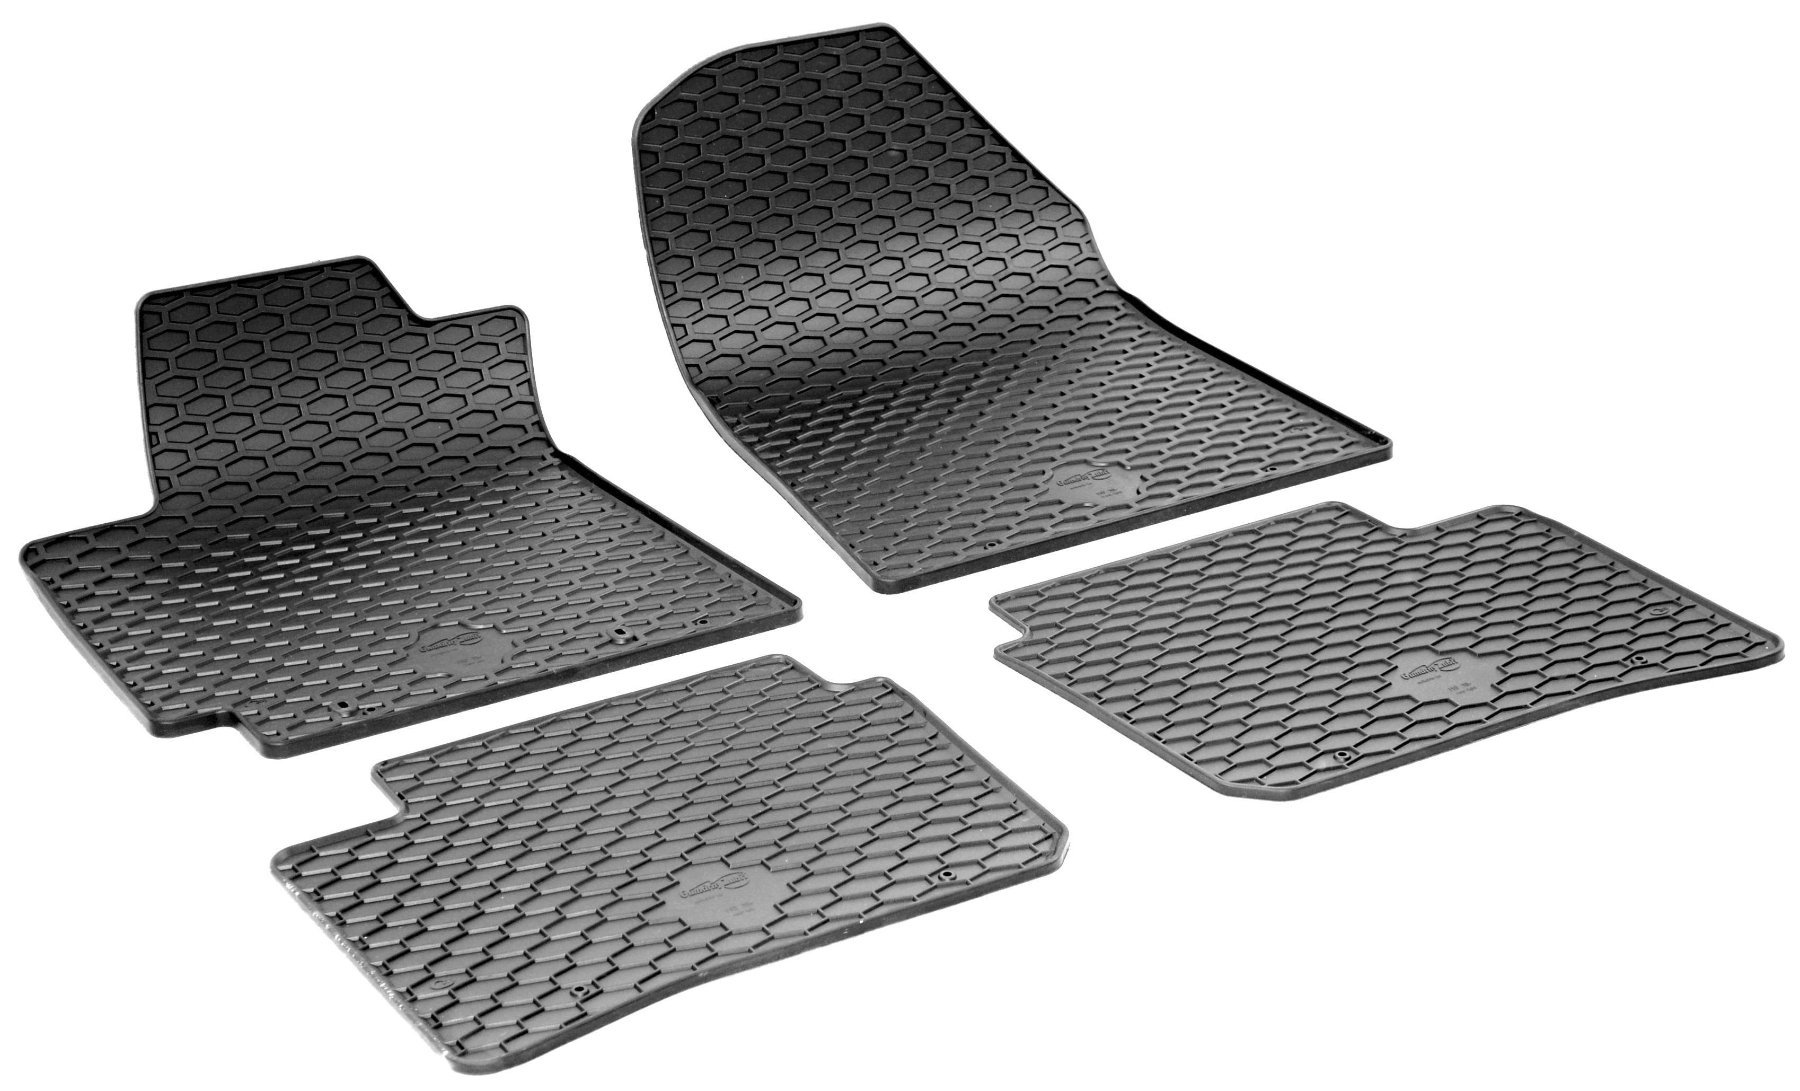 DirtGuard rubberen voetmatten geschikt voor Hyundai i10 (AC3, AI3) 09/2019-Vandaag